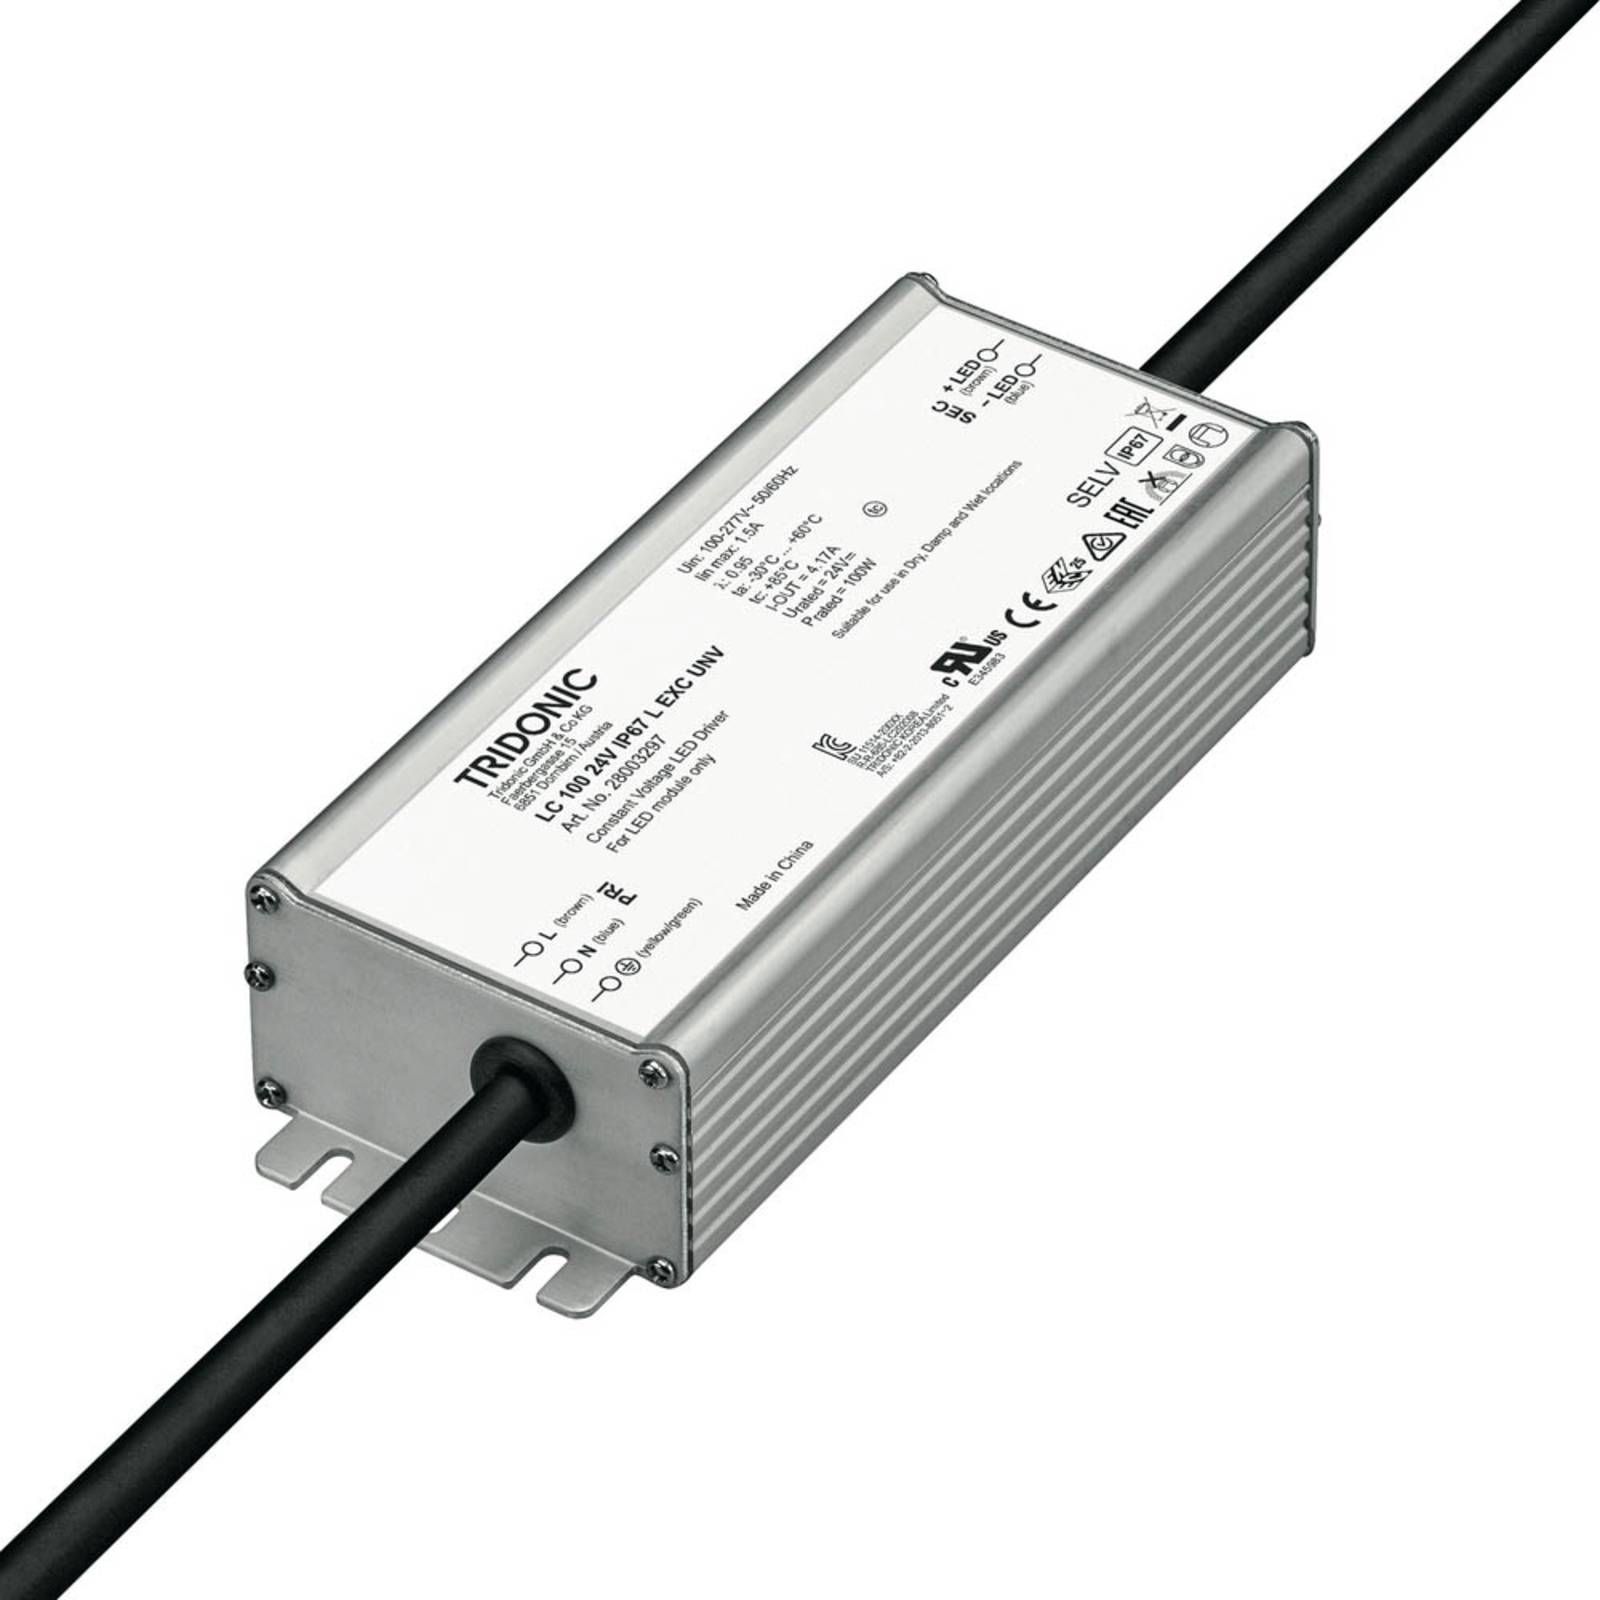 TRIDONIC LED budič LC 100 W 24V IP67 L EXC UNV, hliník, P: 17.8 cm, L: 6.8 cm, K: 3.9cm